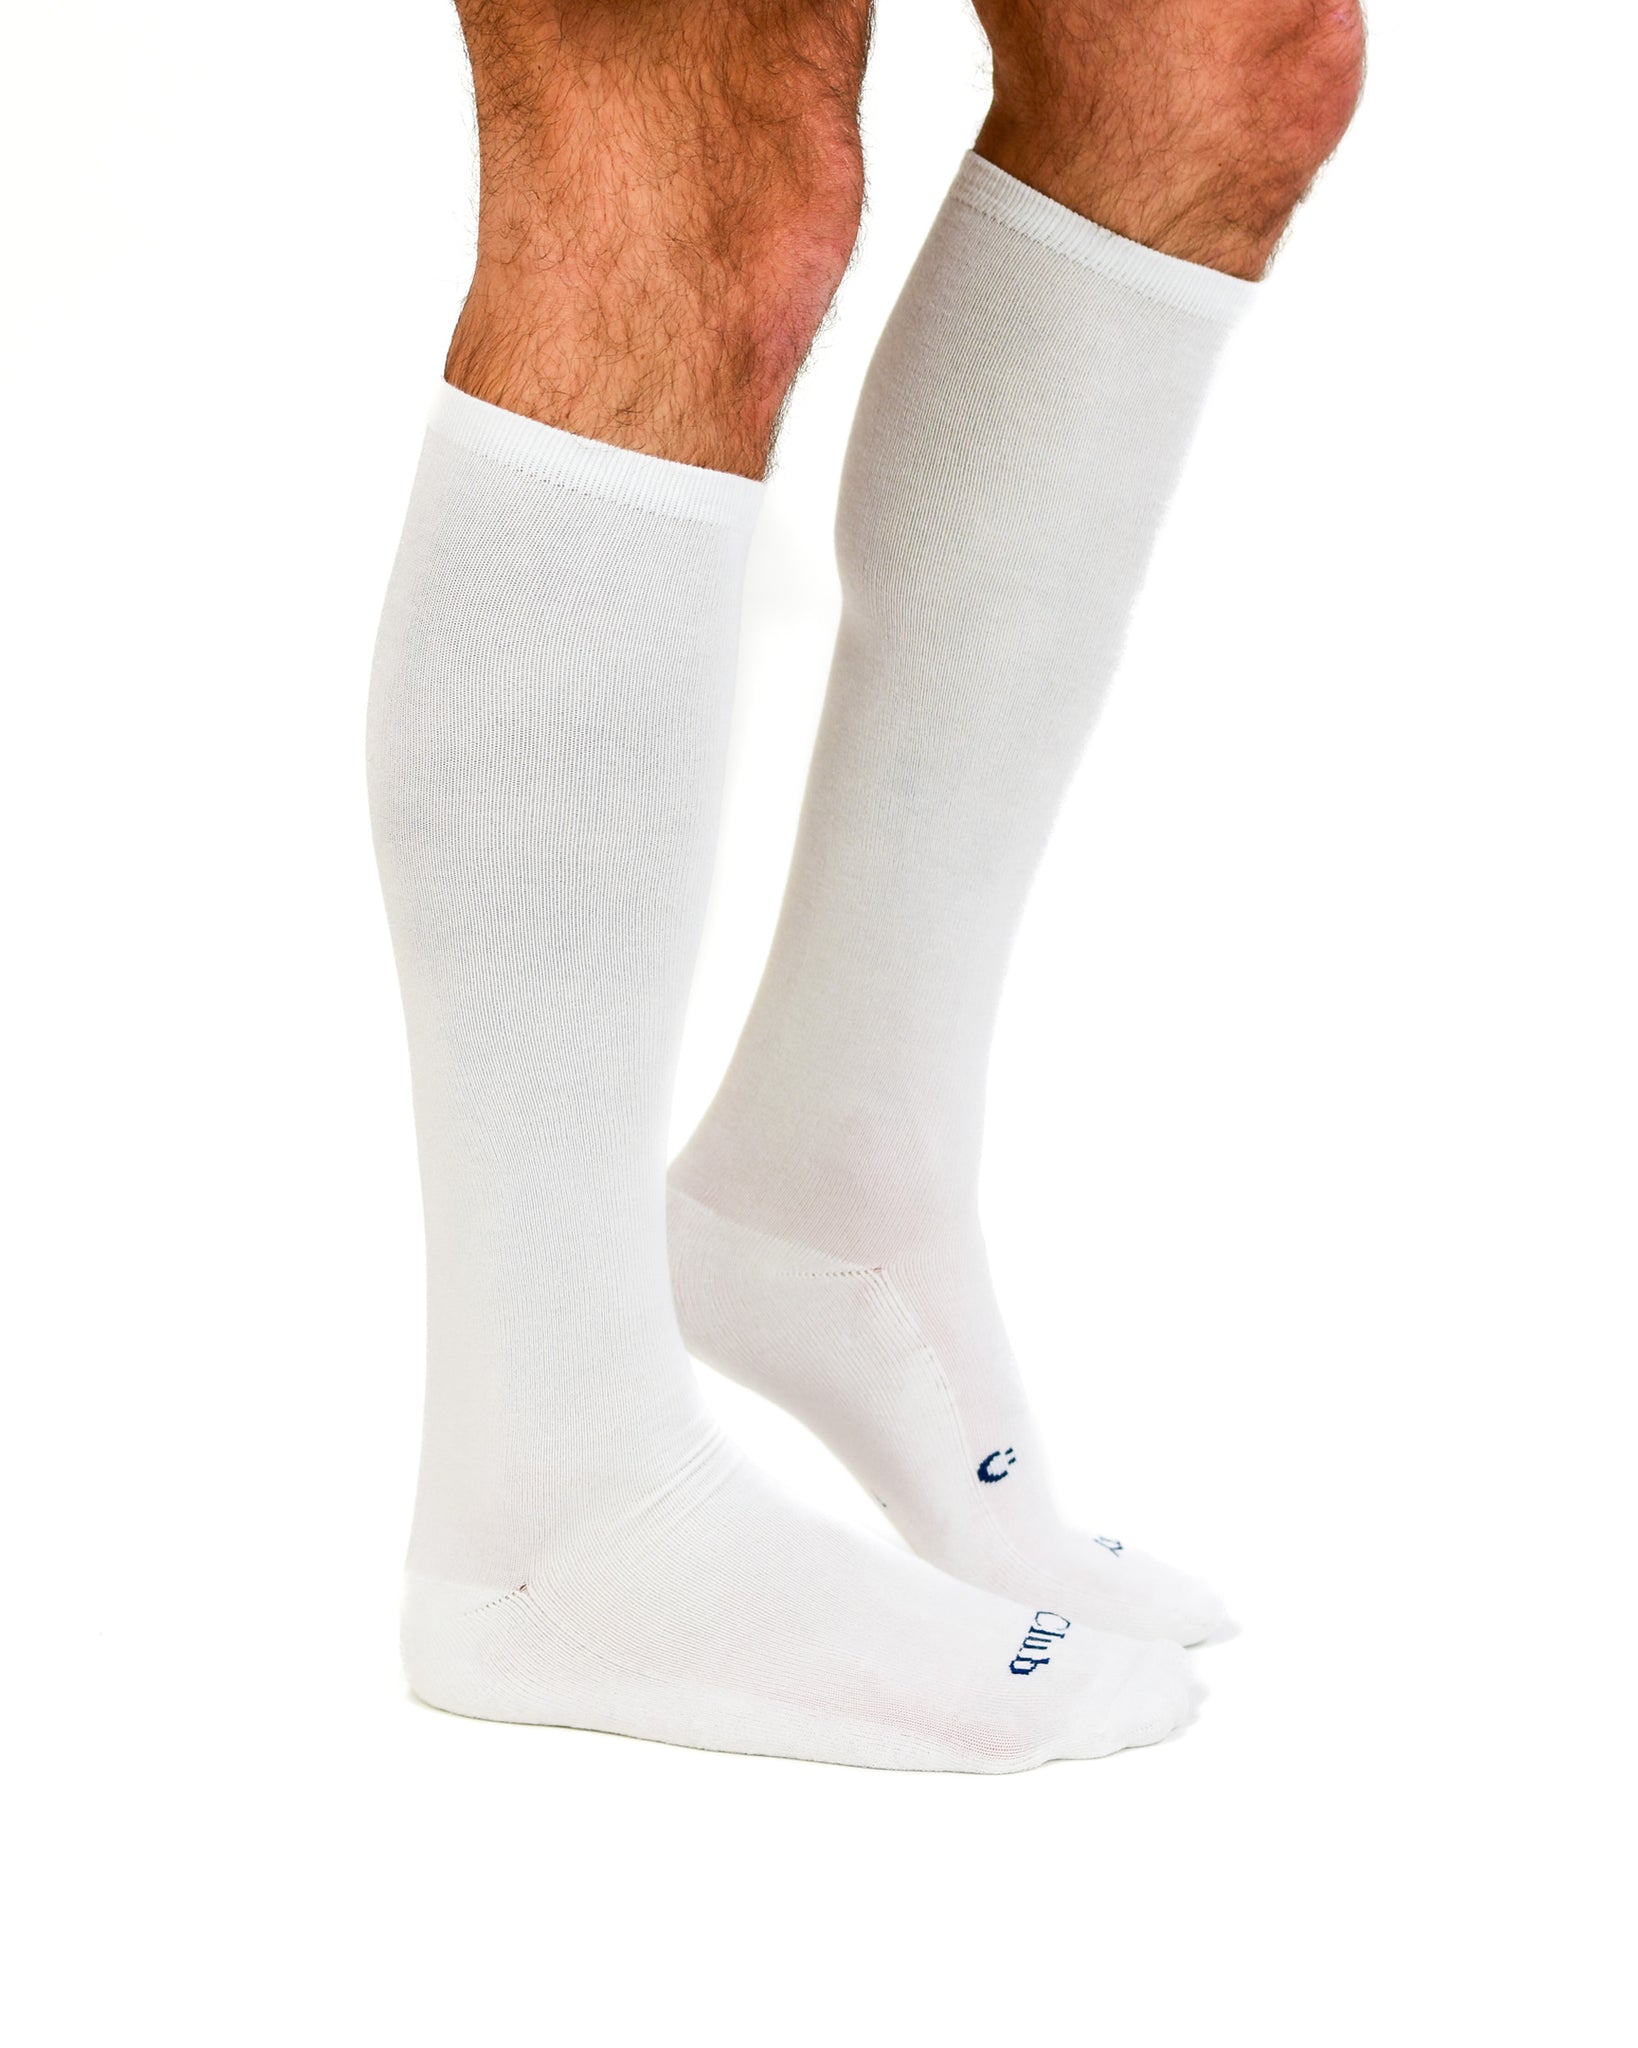 Everyday Knee-High Seamless Feel Sock (Adults) - White